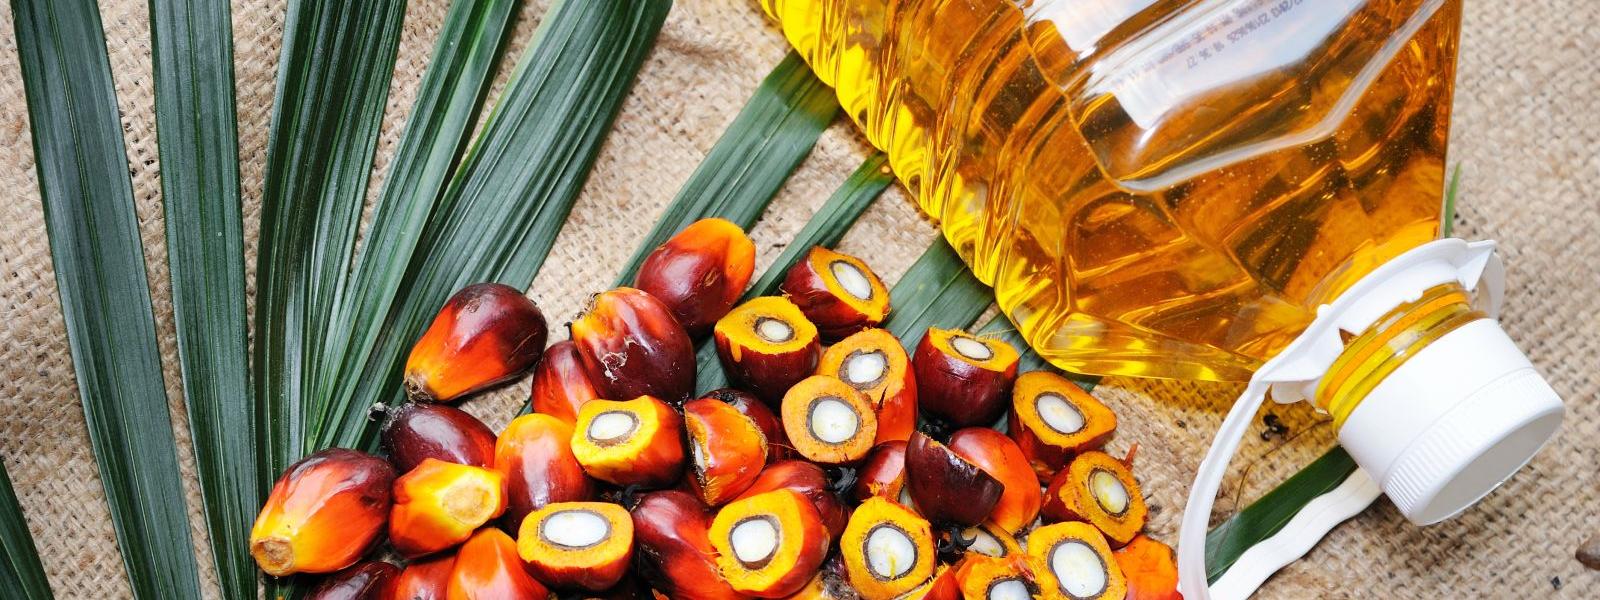 Ban on Palm Oil imports could change - Keheliya